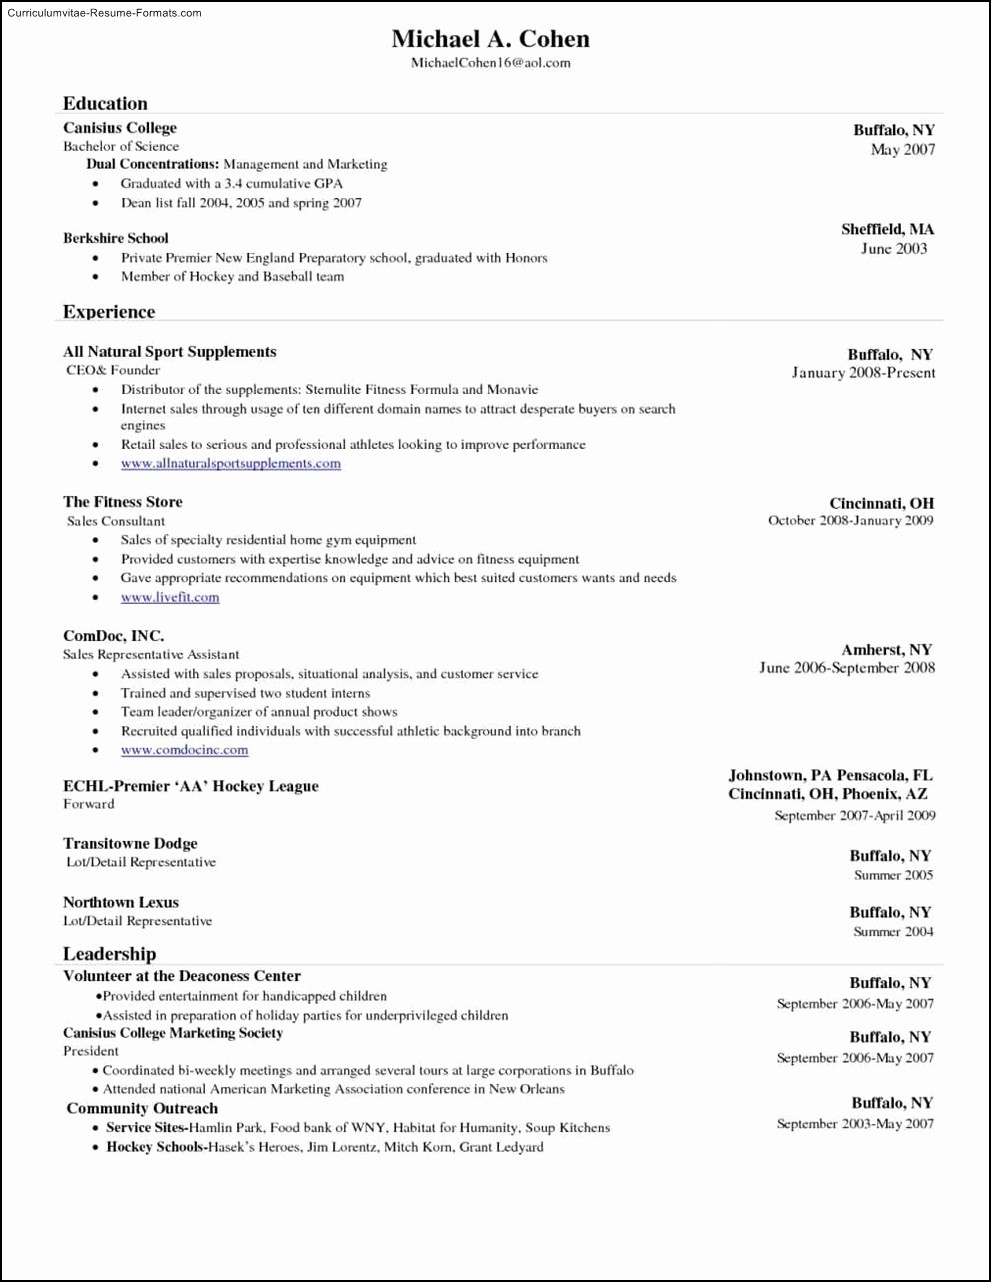 Download Resume Templates Microsoft Word Unique Microsoft Word 2010 Resume Template Download Free